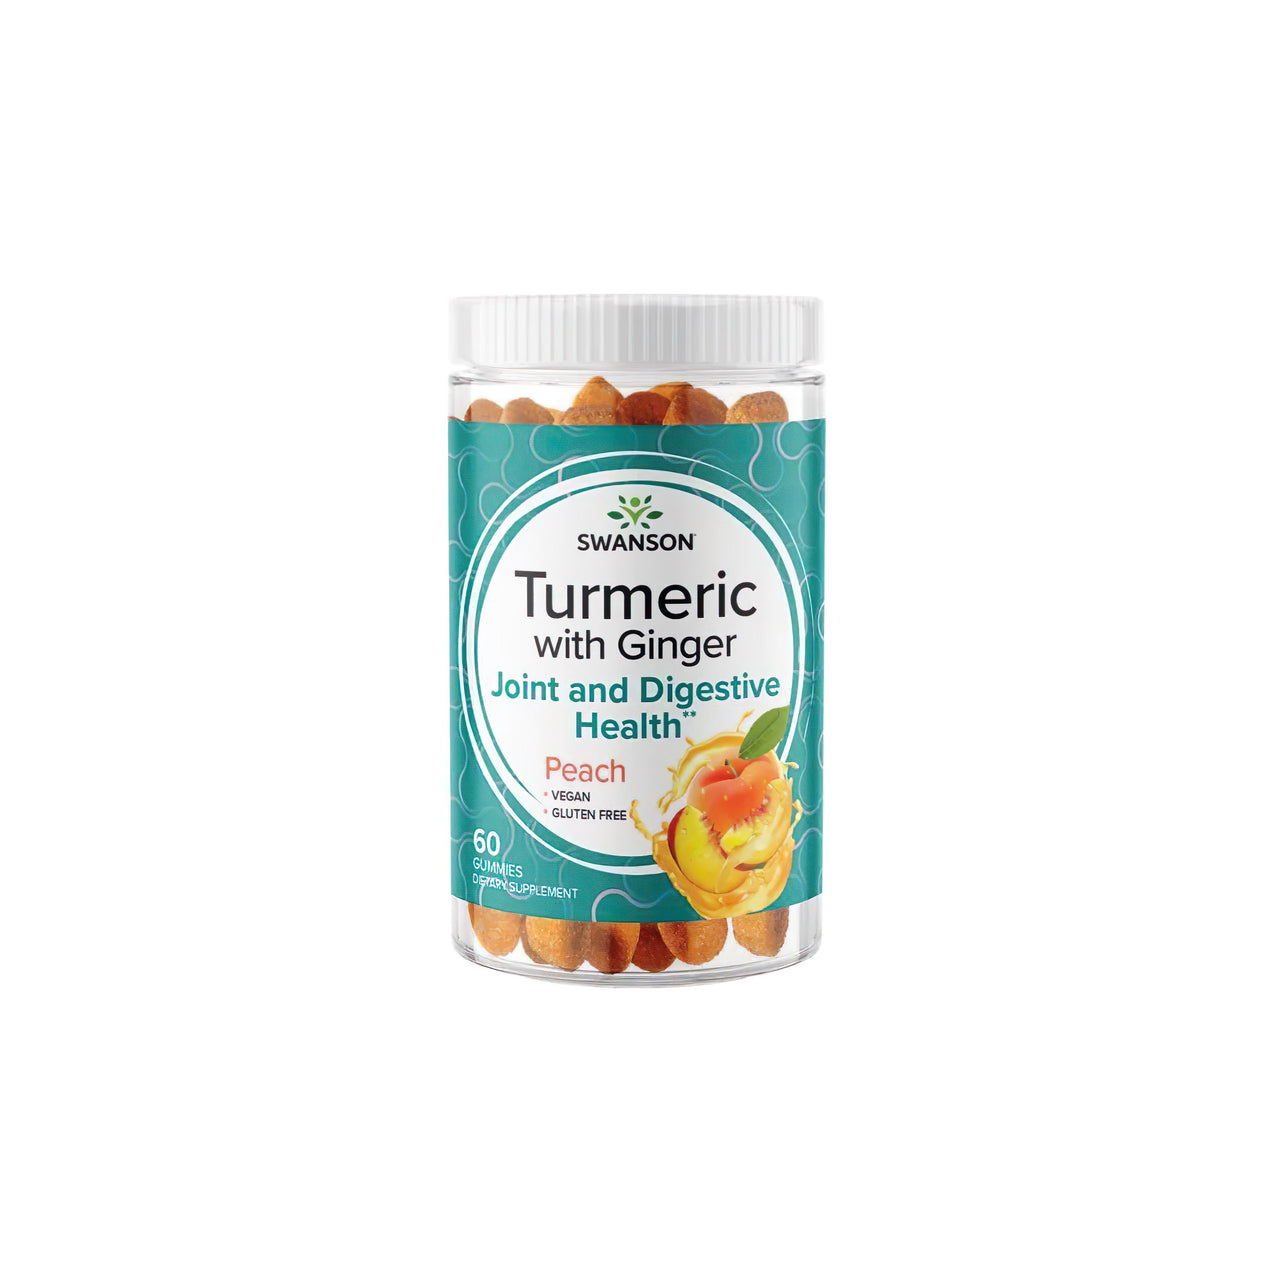 A jar of Swanson Turmeric with Ginger 60 gummies - Peach health.